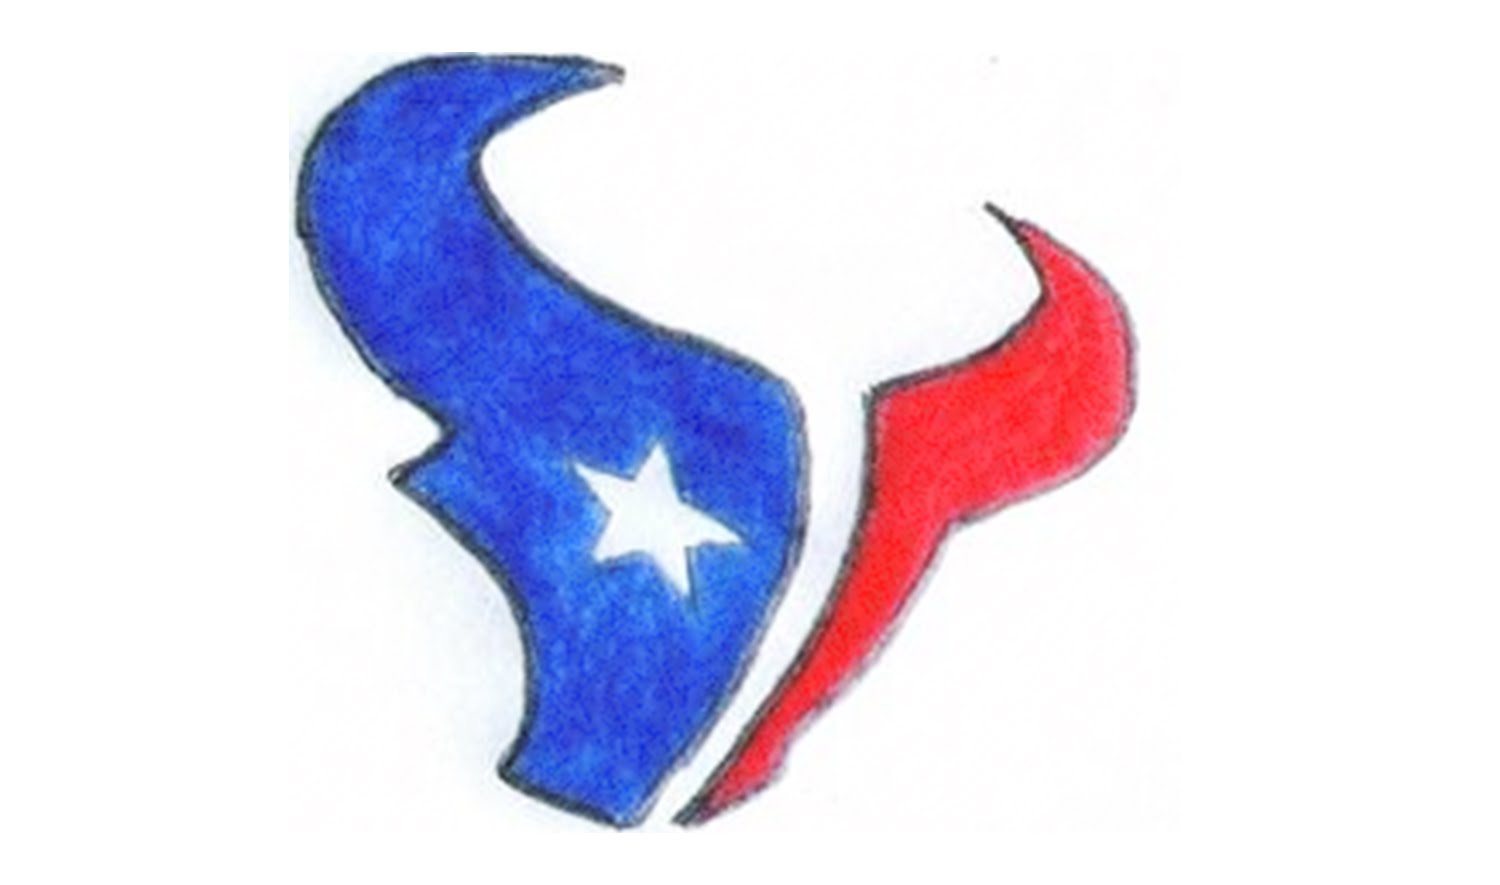 How to Draw the Houston Texans Logo (NFL) - YouTube